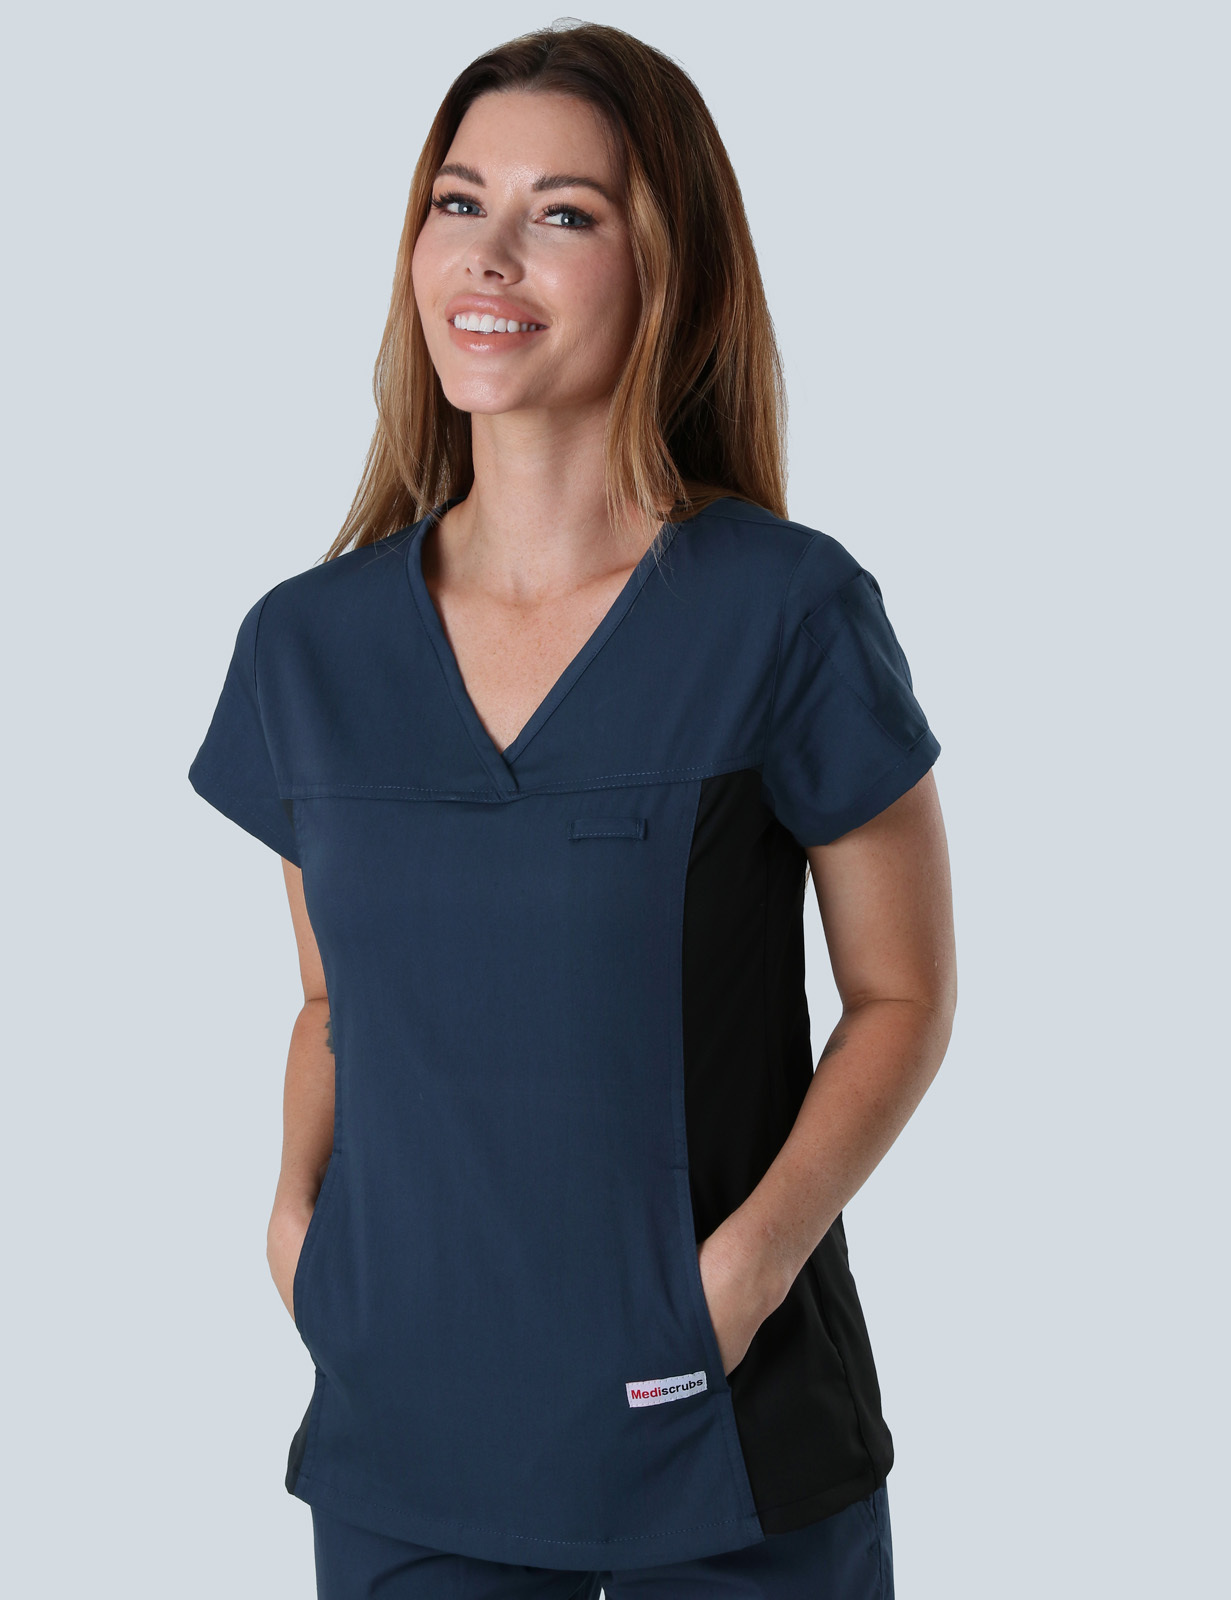 Paediatric Unit Uniform Bundle Top Only - (Women's Fit Spandex Top in Navy incl Logo)